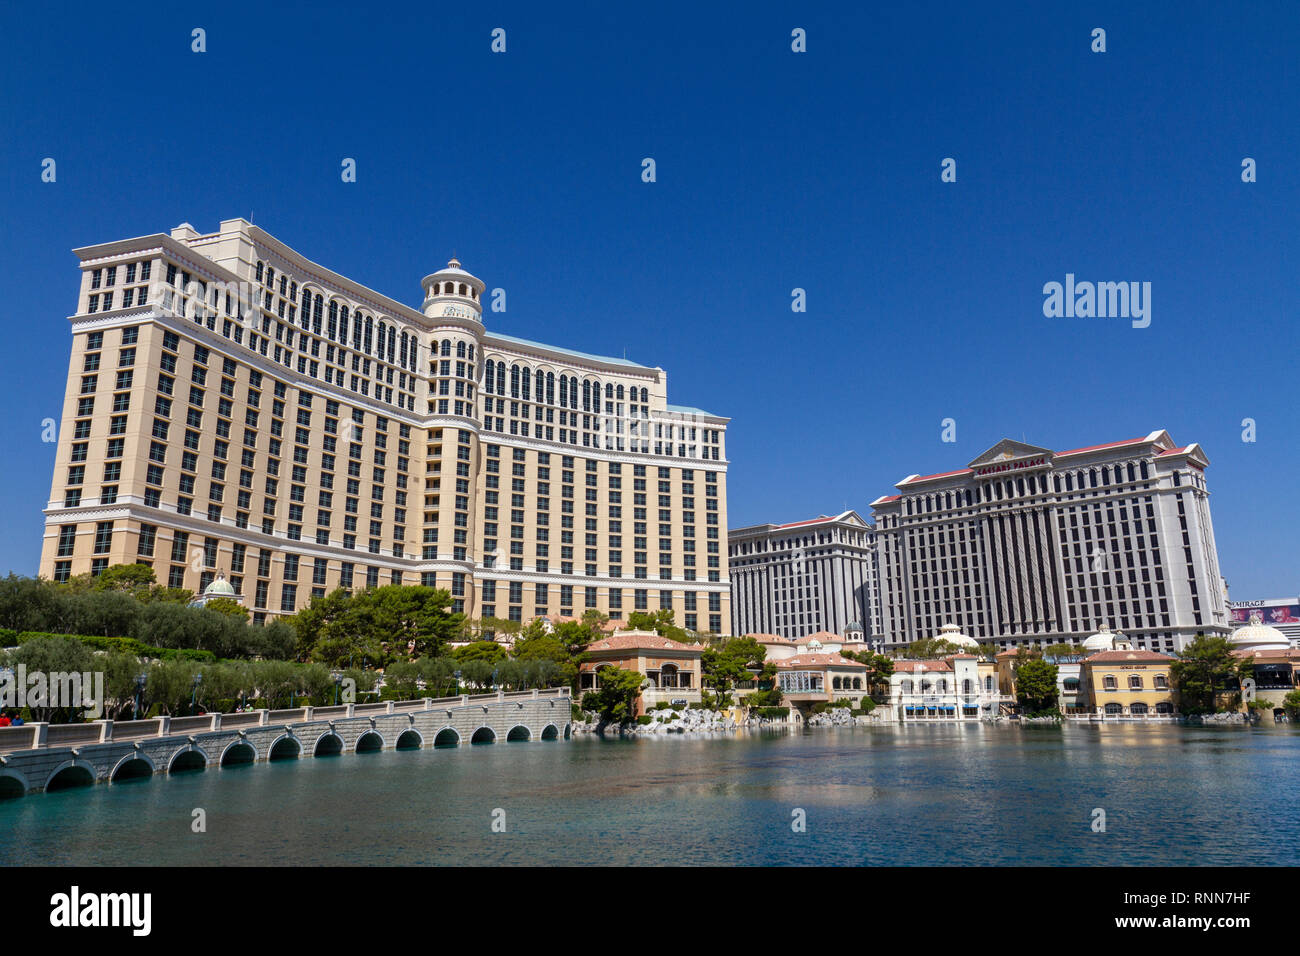 The Bellagio Hotel and Casino and Caesars Palace Las Vegas Hotel & Casino, Las Vegas (City of Las Vegas), Nevada, United States. Stock Photo